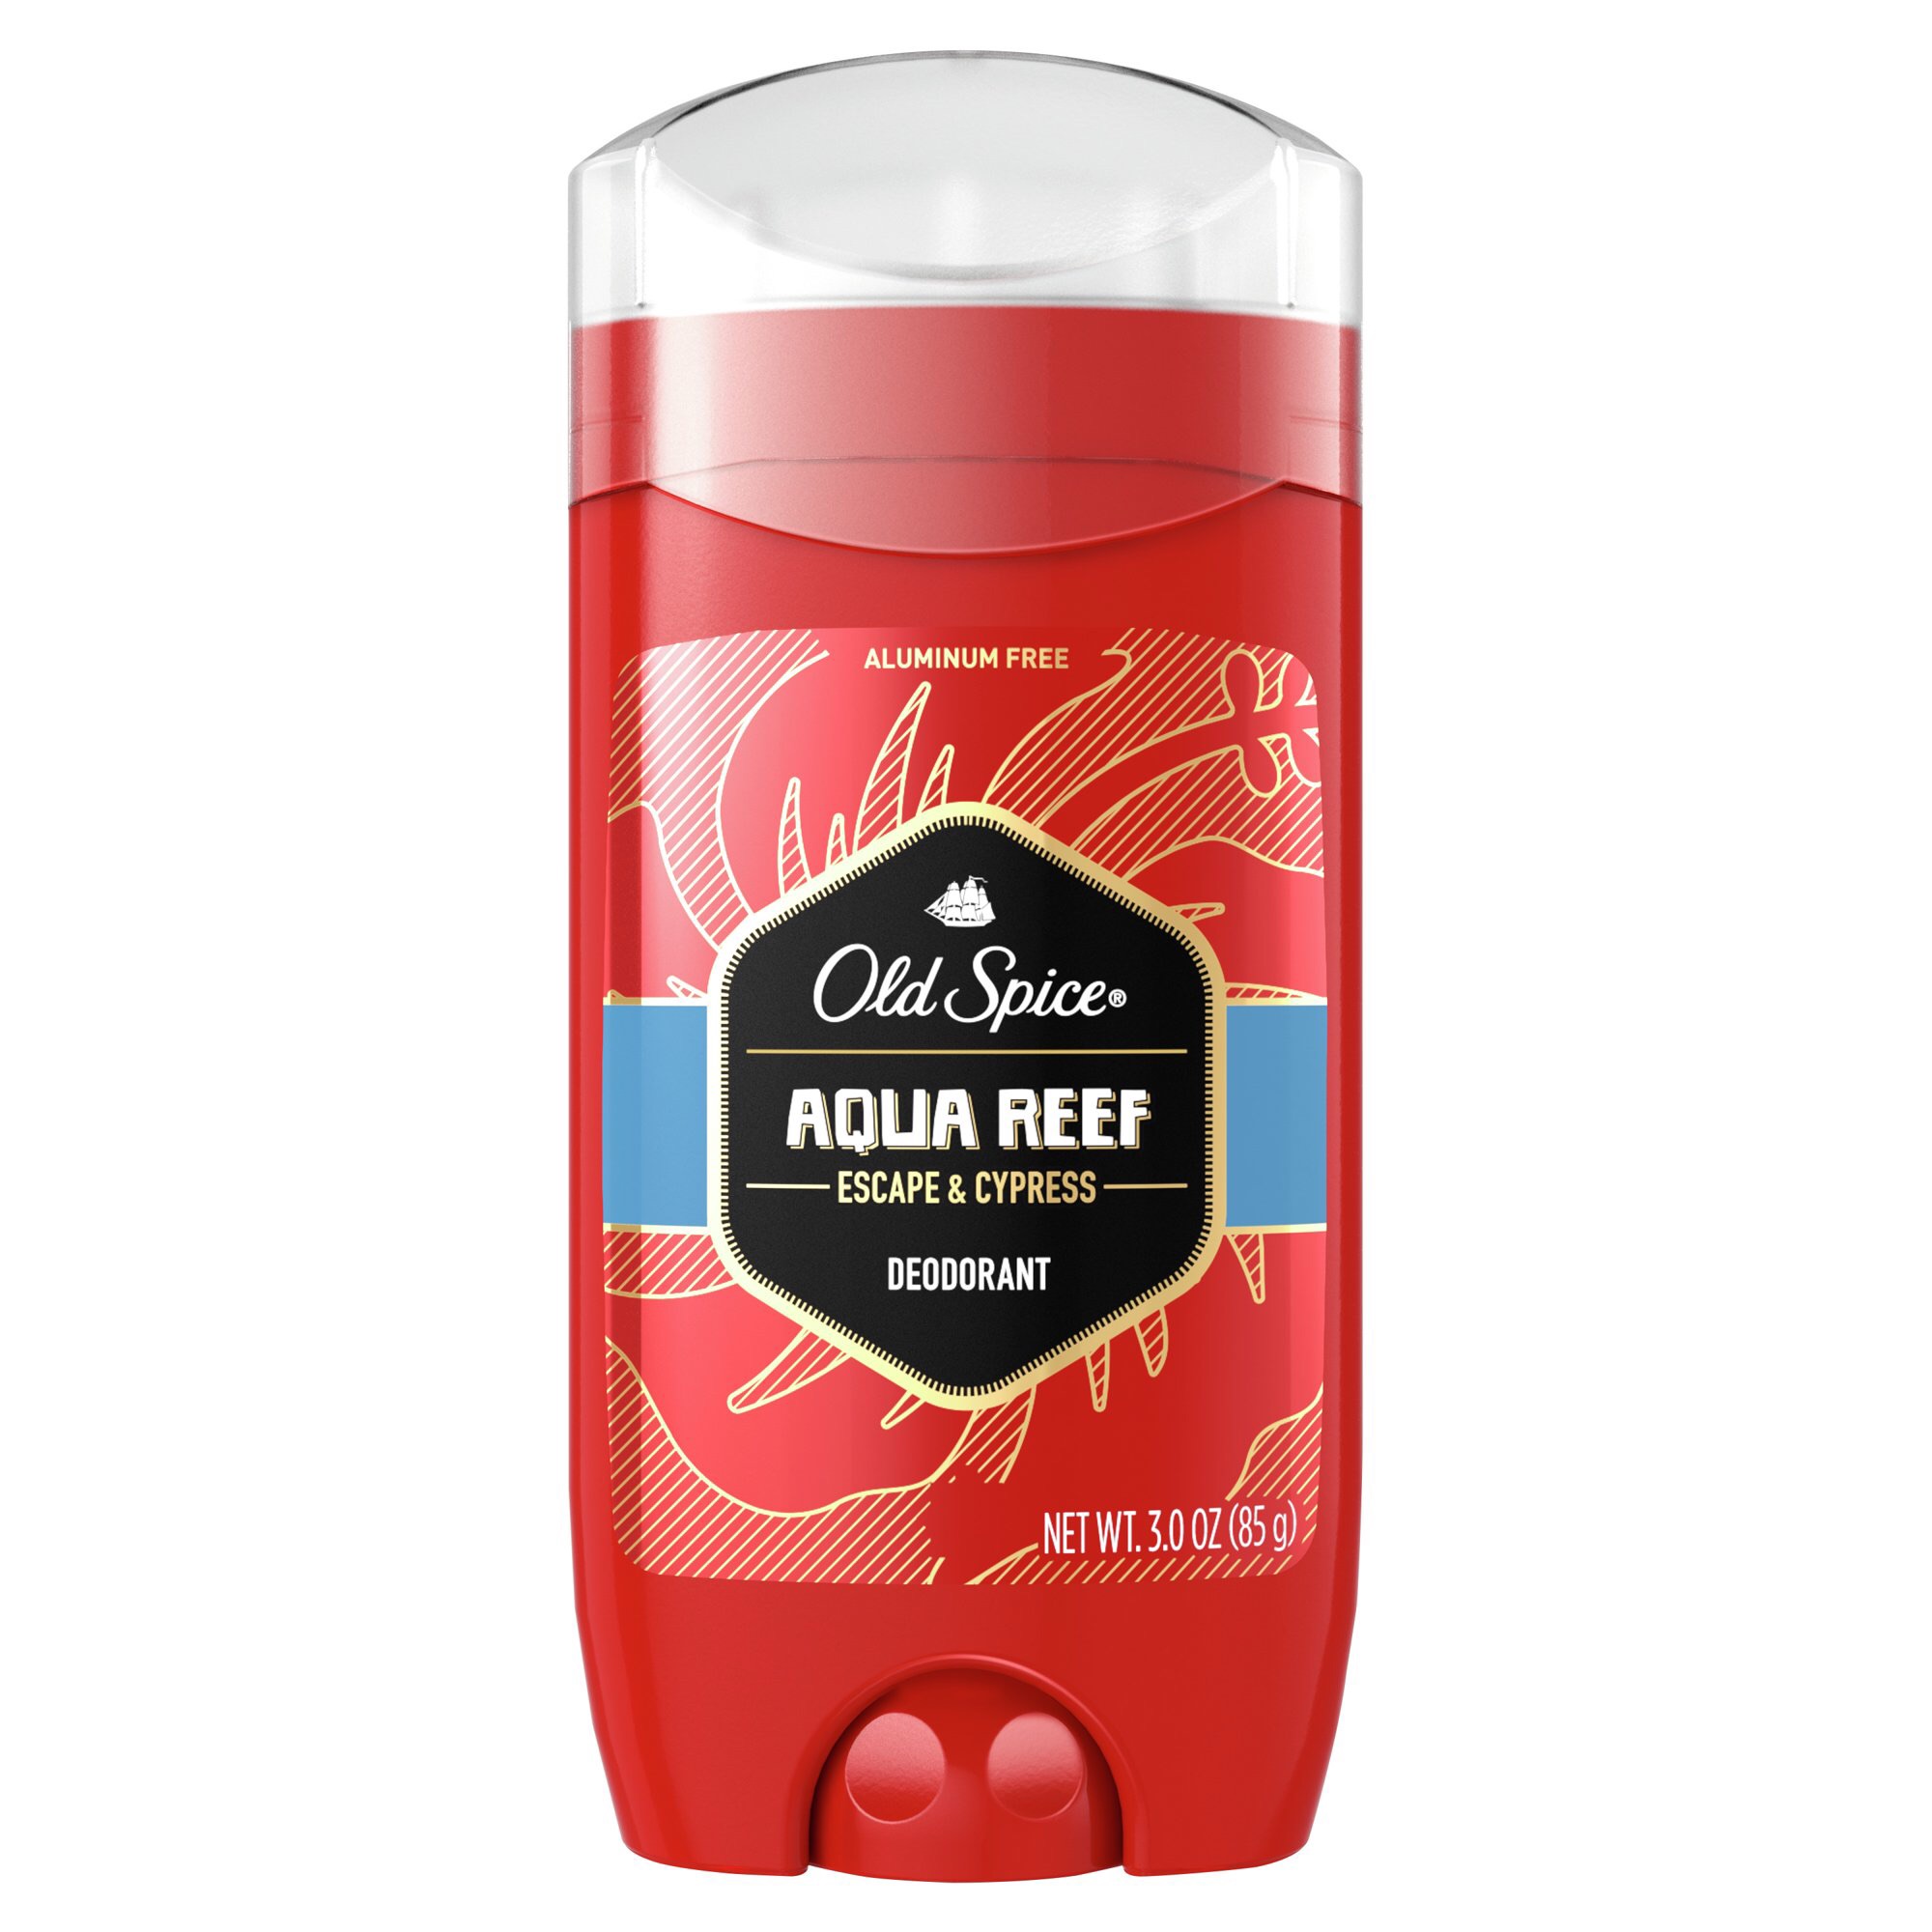 Old Spice Red Zone Aqua Reef Scent Deodorant for Men 85 g